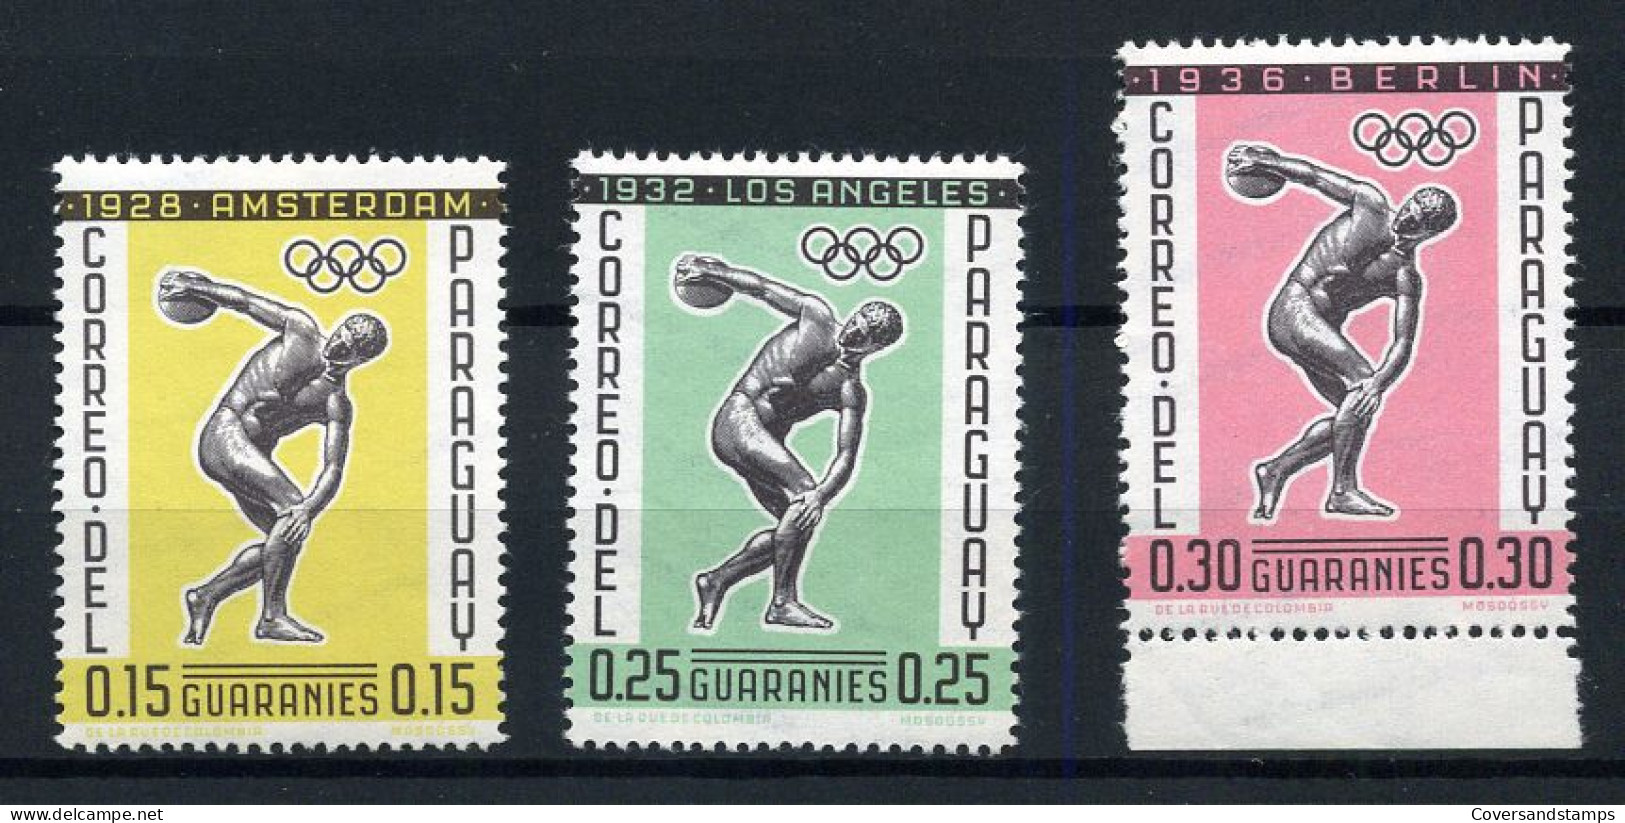 Paraguay - Olympic Games Berlin 1936 - Sommer 1936: Berlin